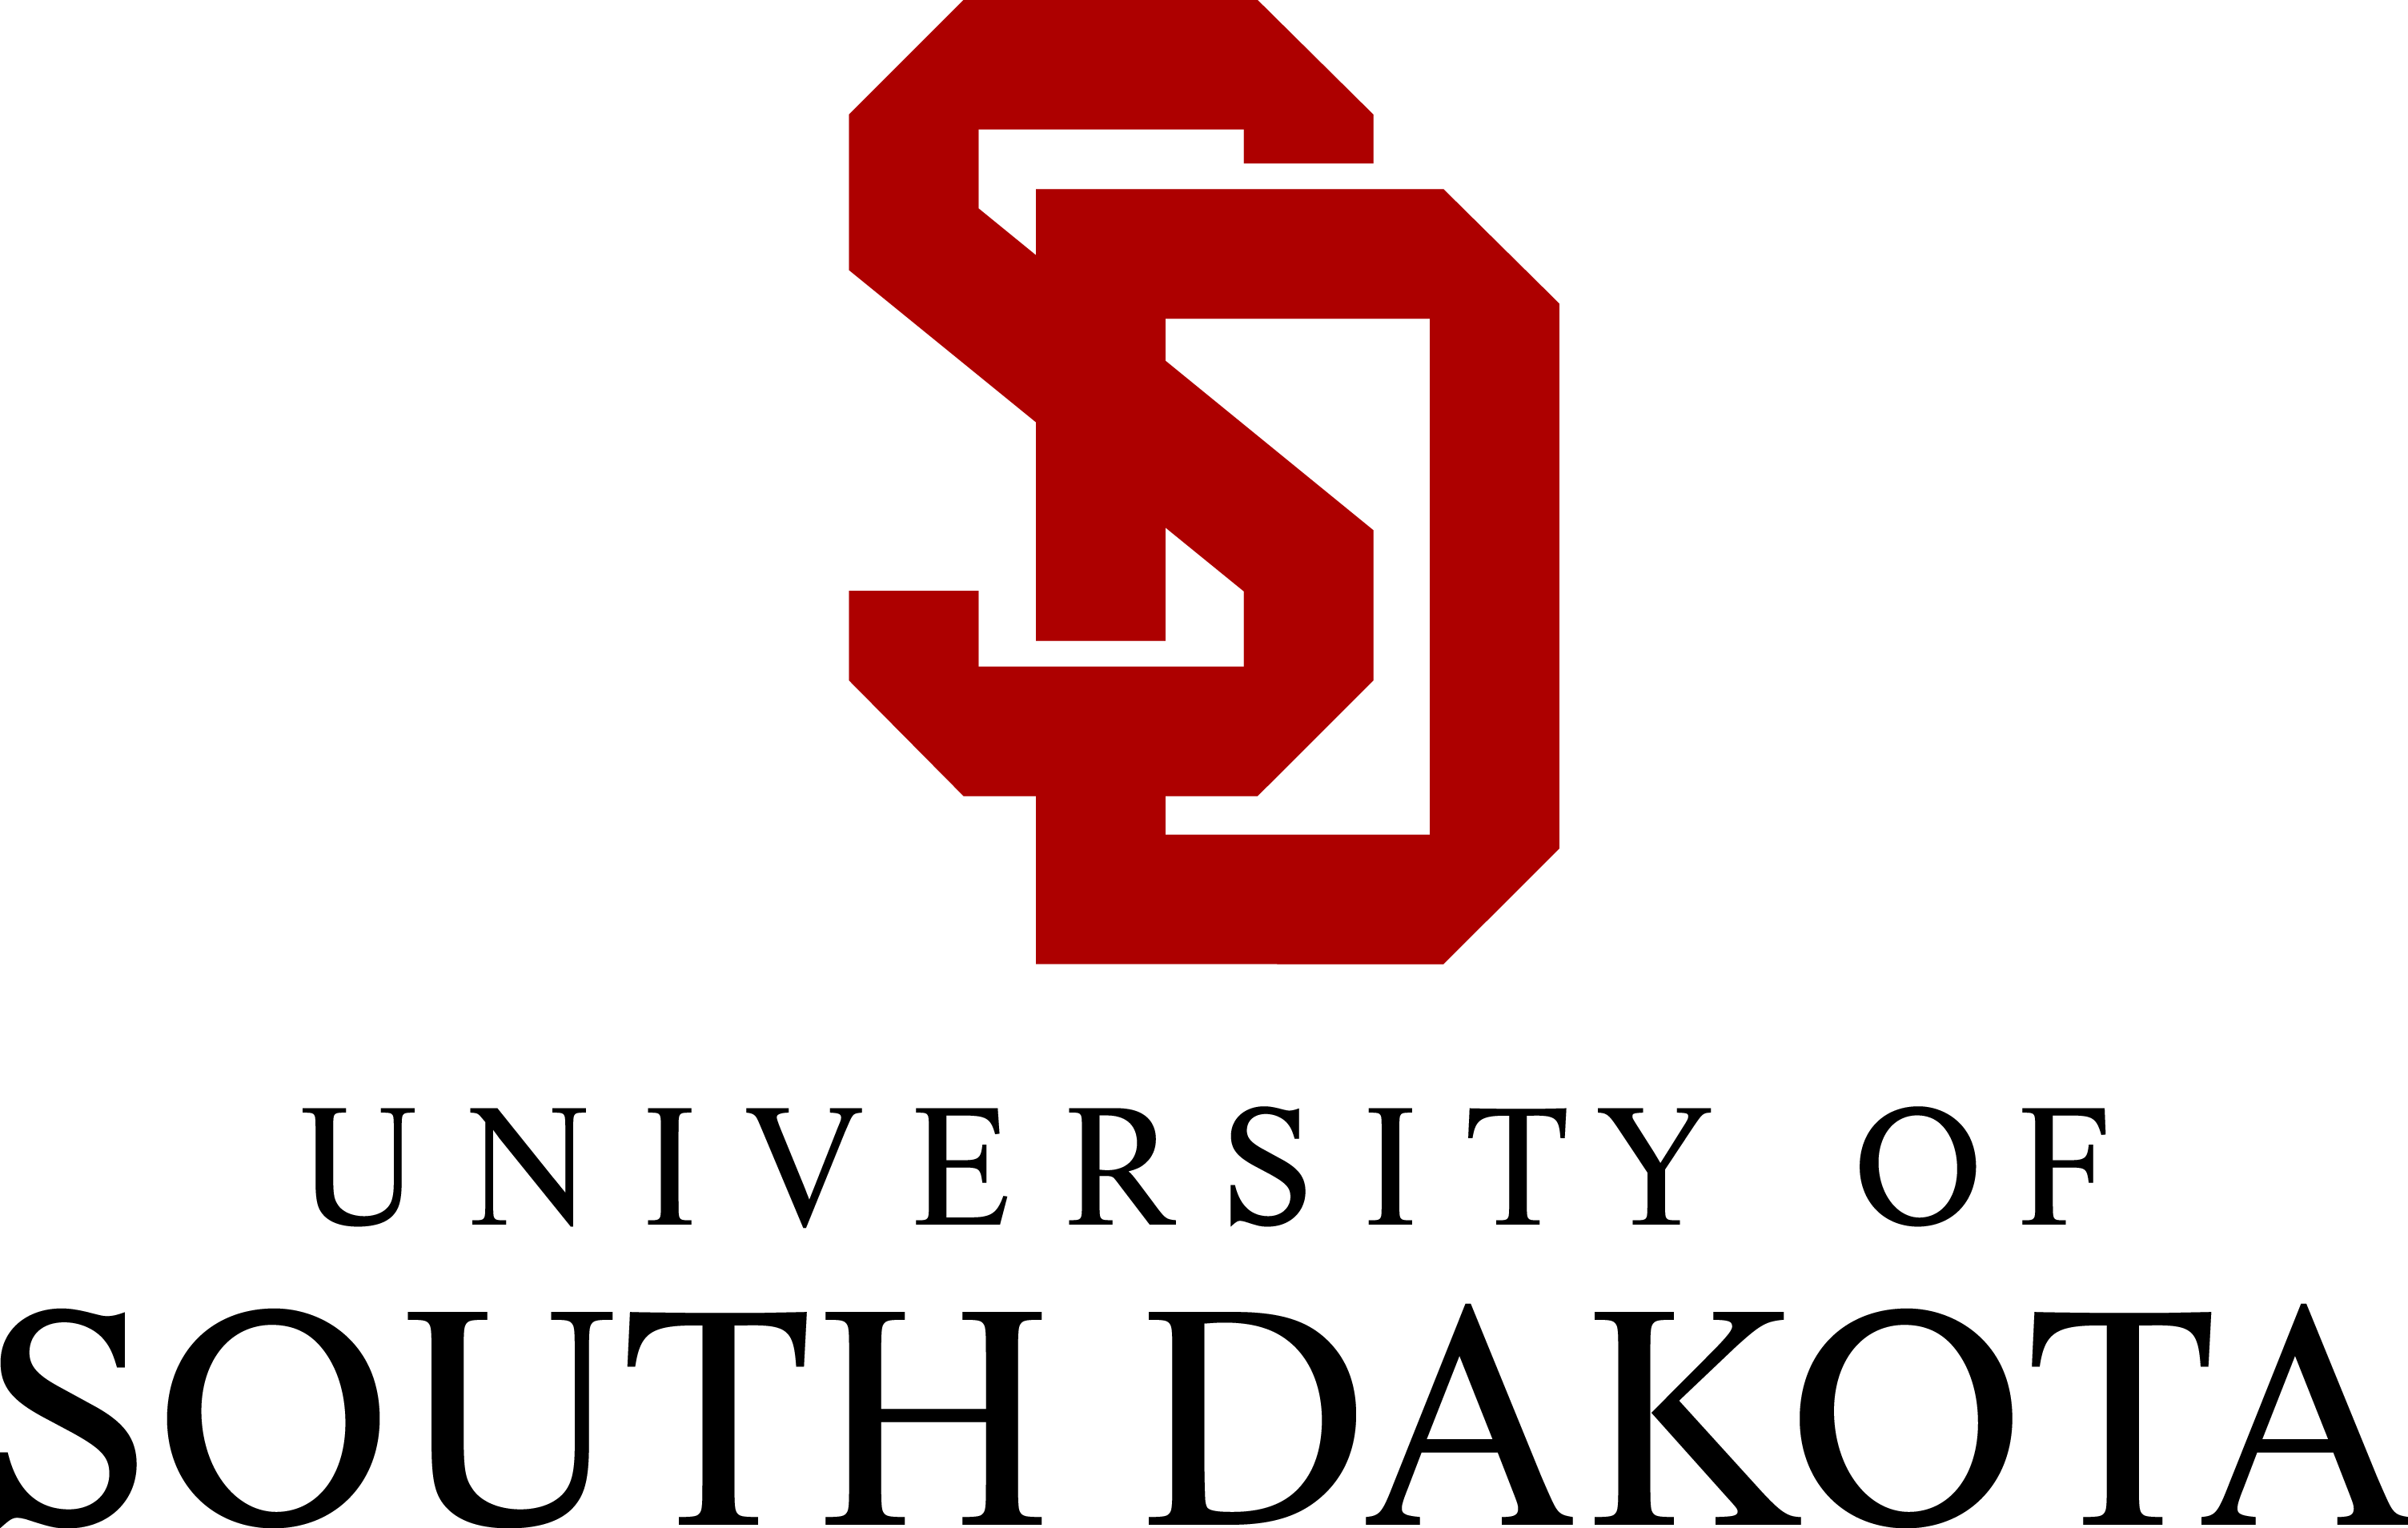 Dakota Logo - University Logos